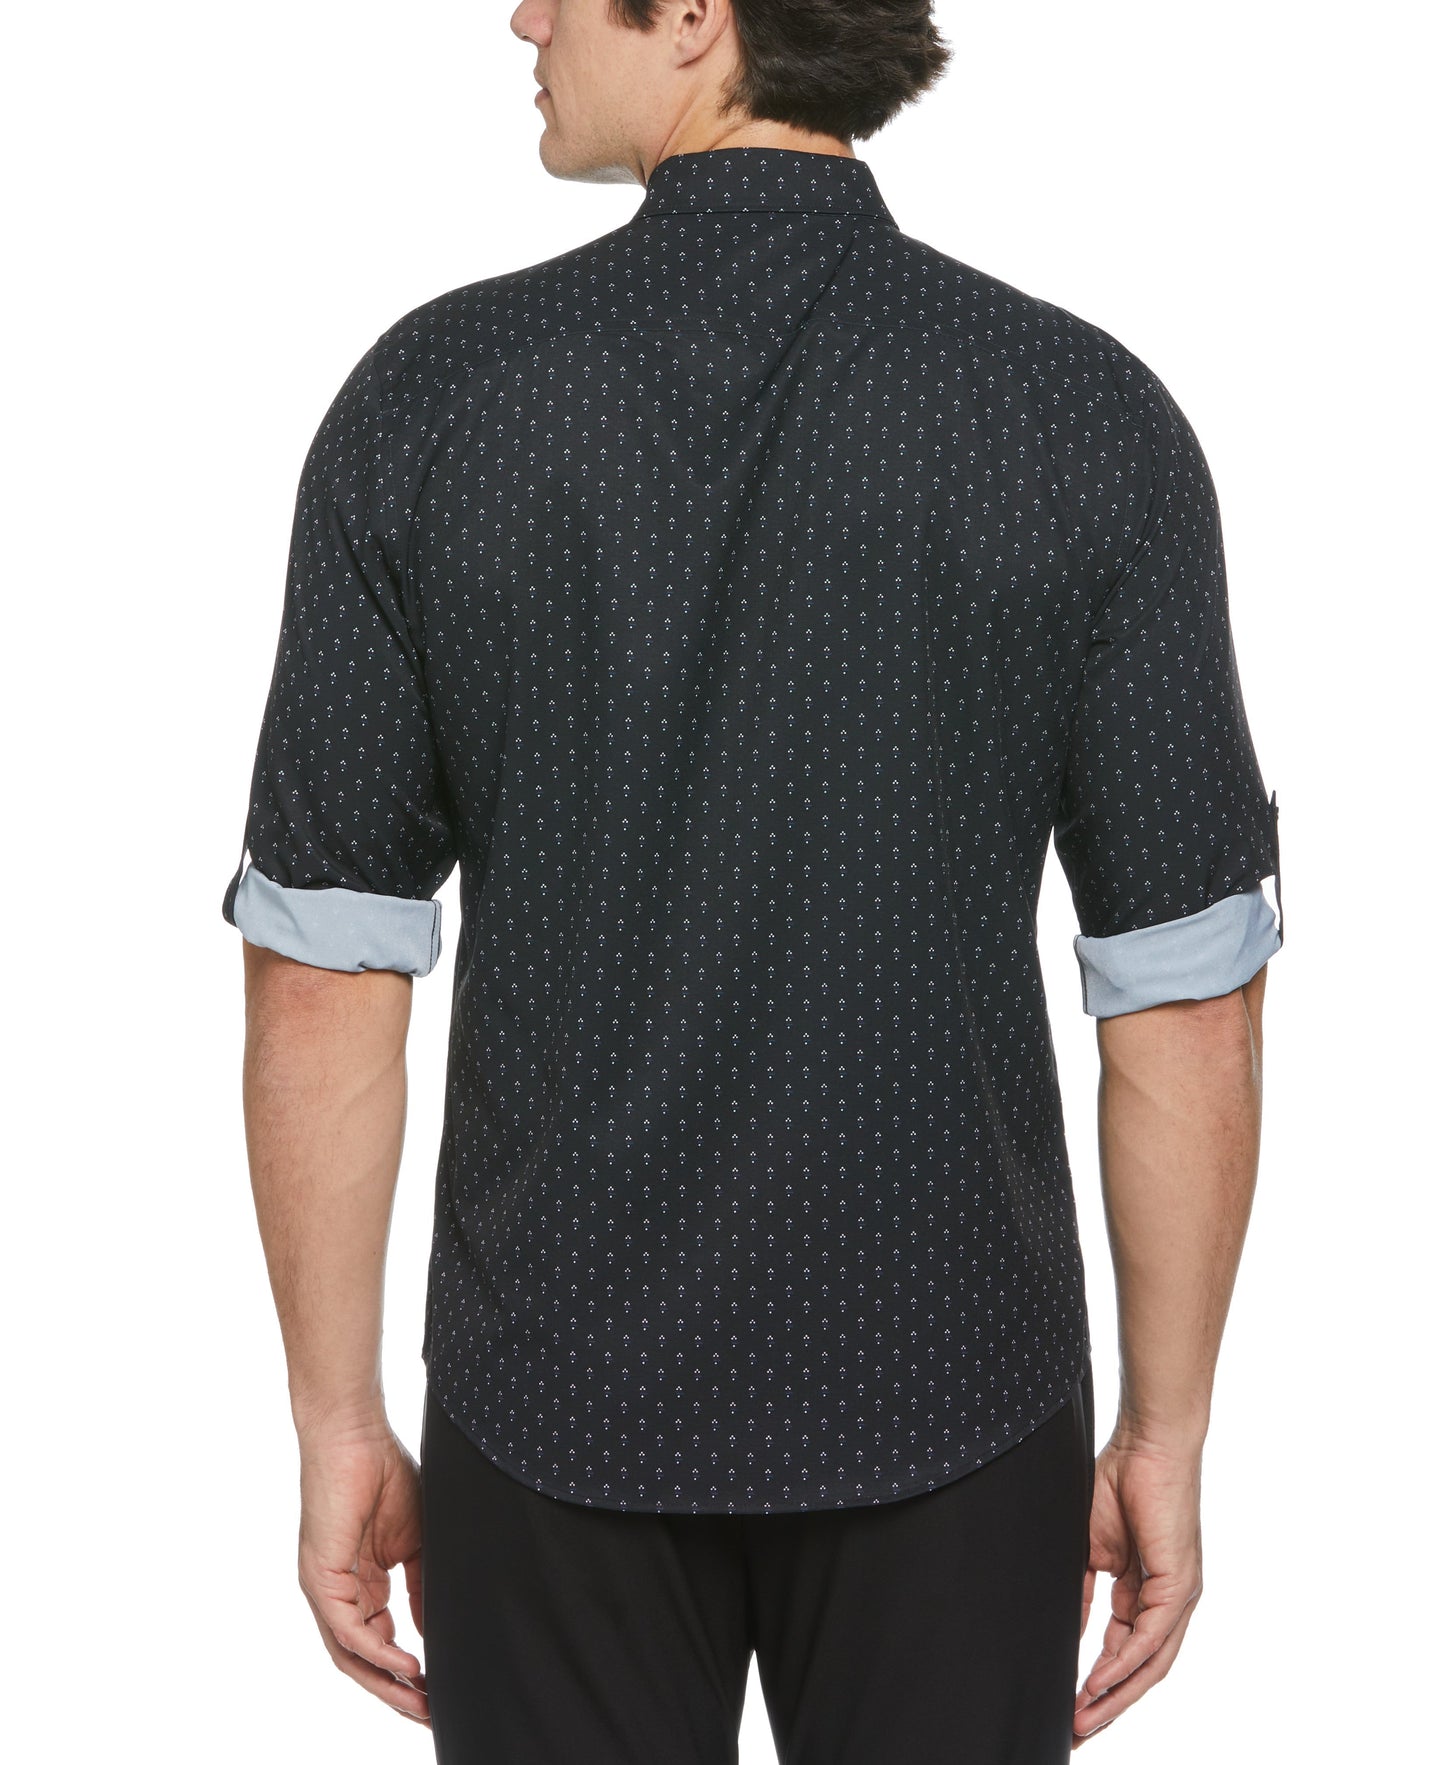 Total Stretch Rolled Sleeve Micro Geometric Shirt